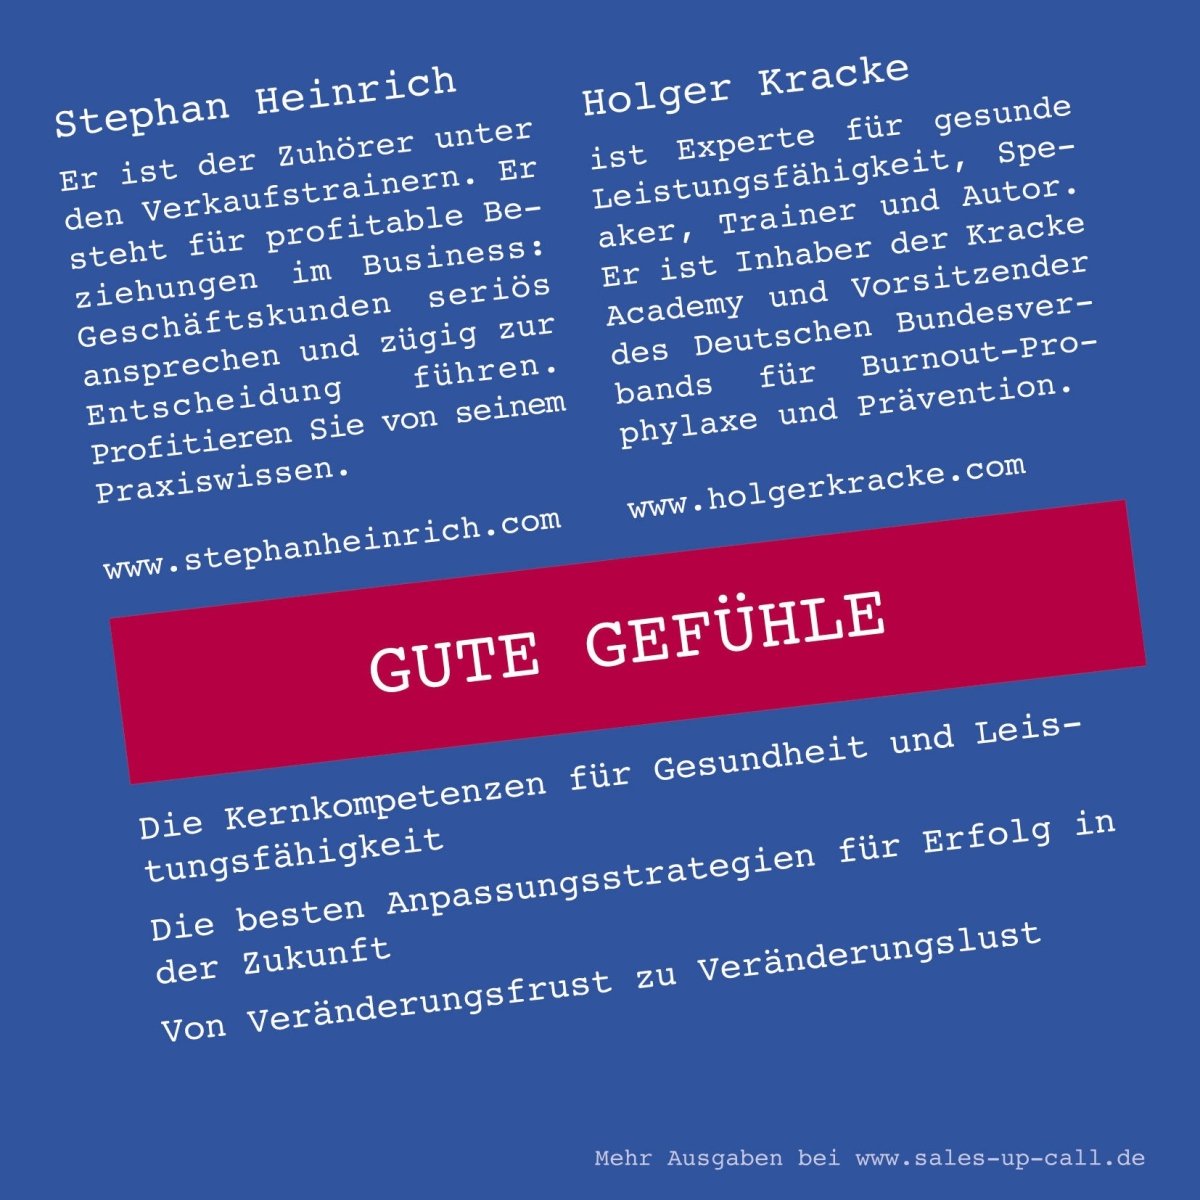 Gute Gefühle - Sales-up-Call - Stephan Heinrich